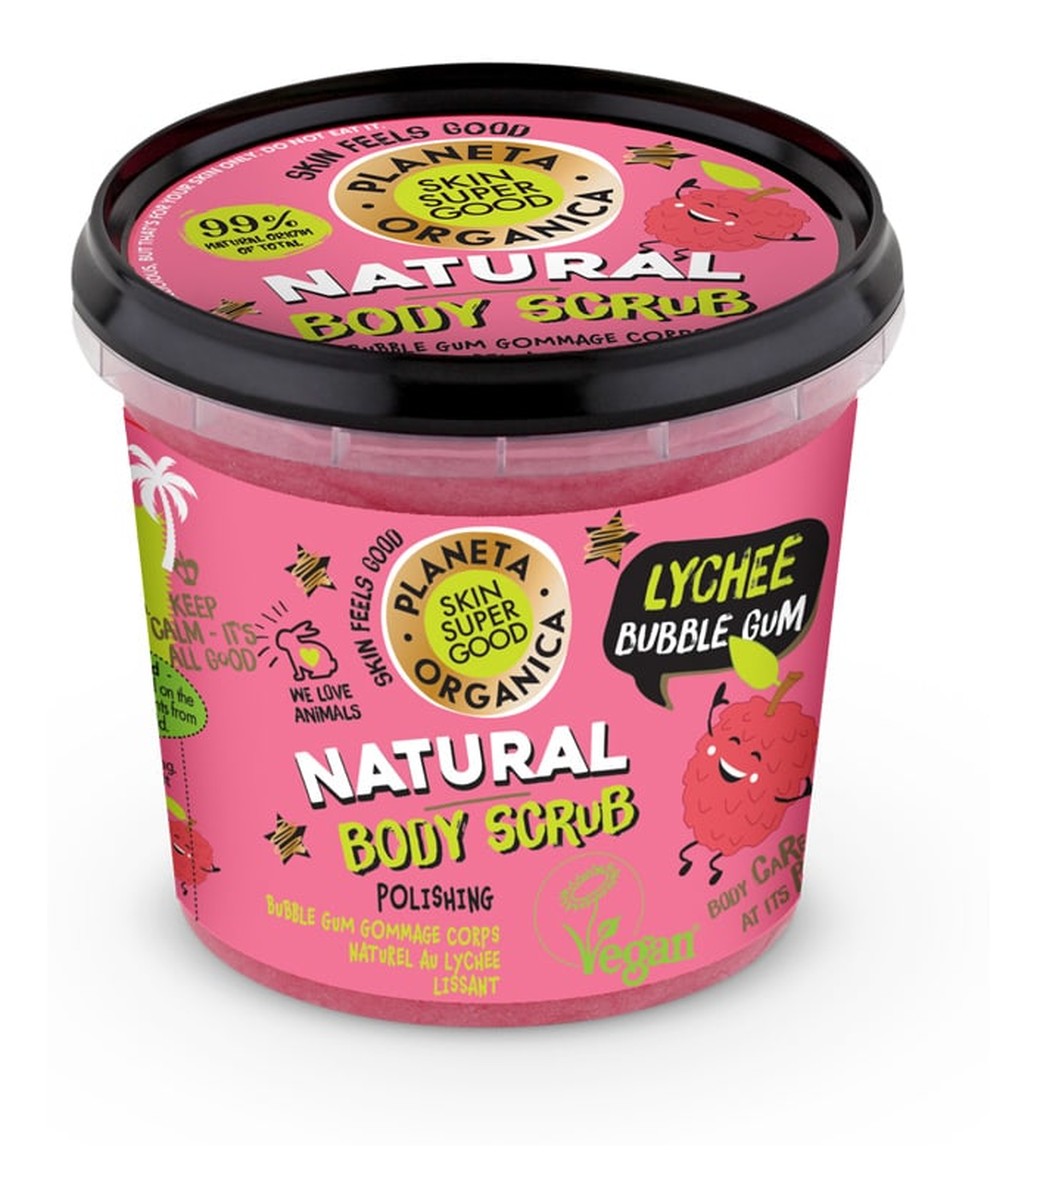 Naturalny scrub do ciała Lychee Bubble Gum